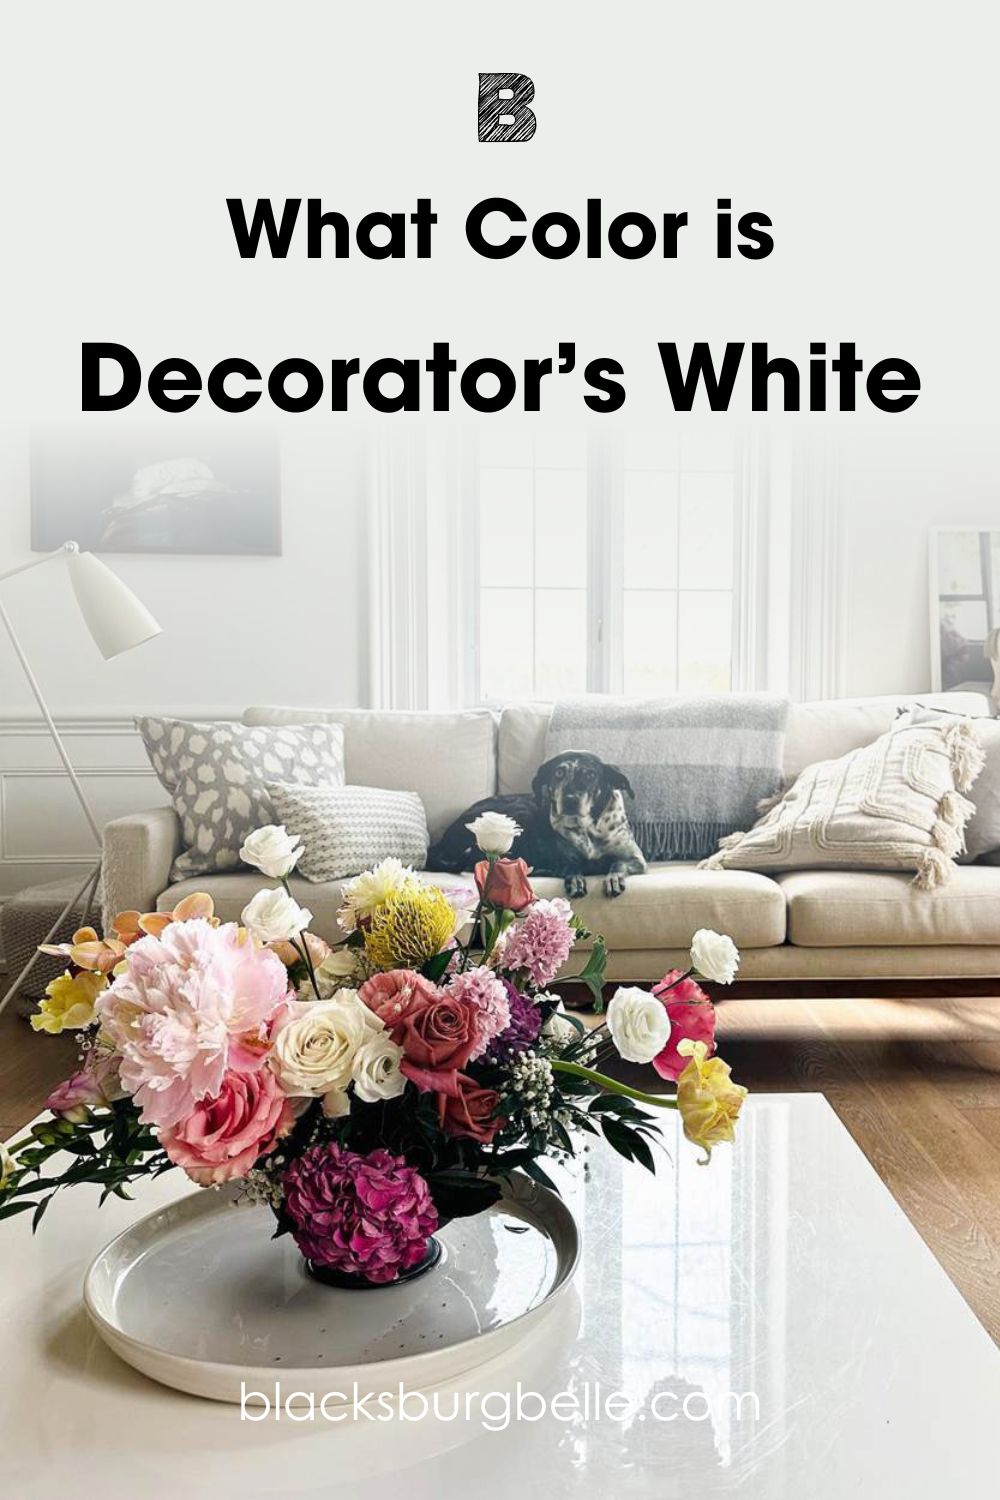 Decorator’s White